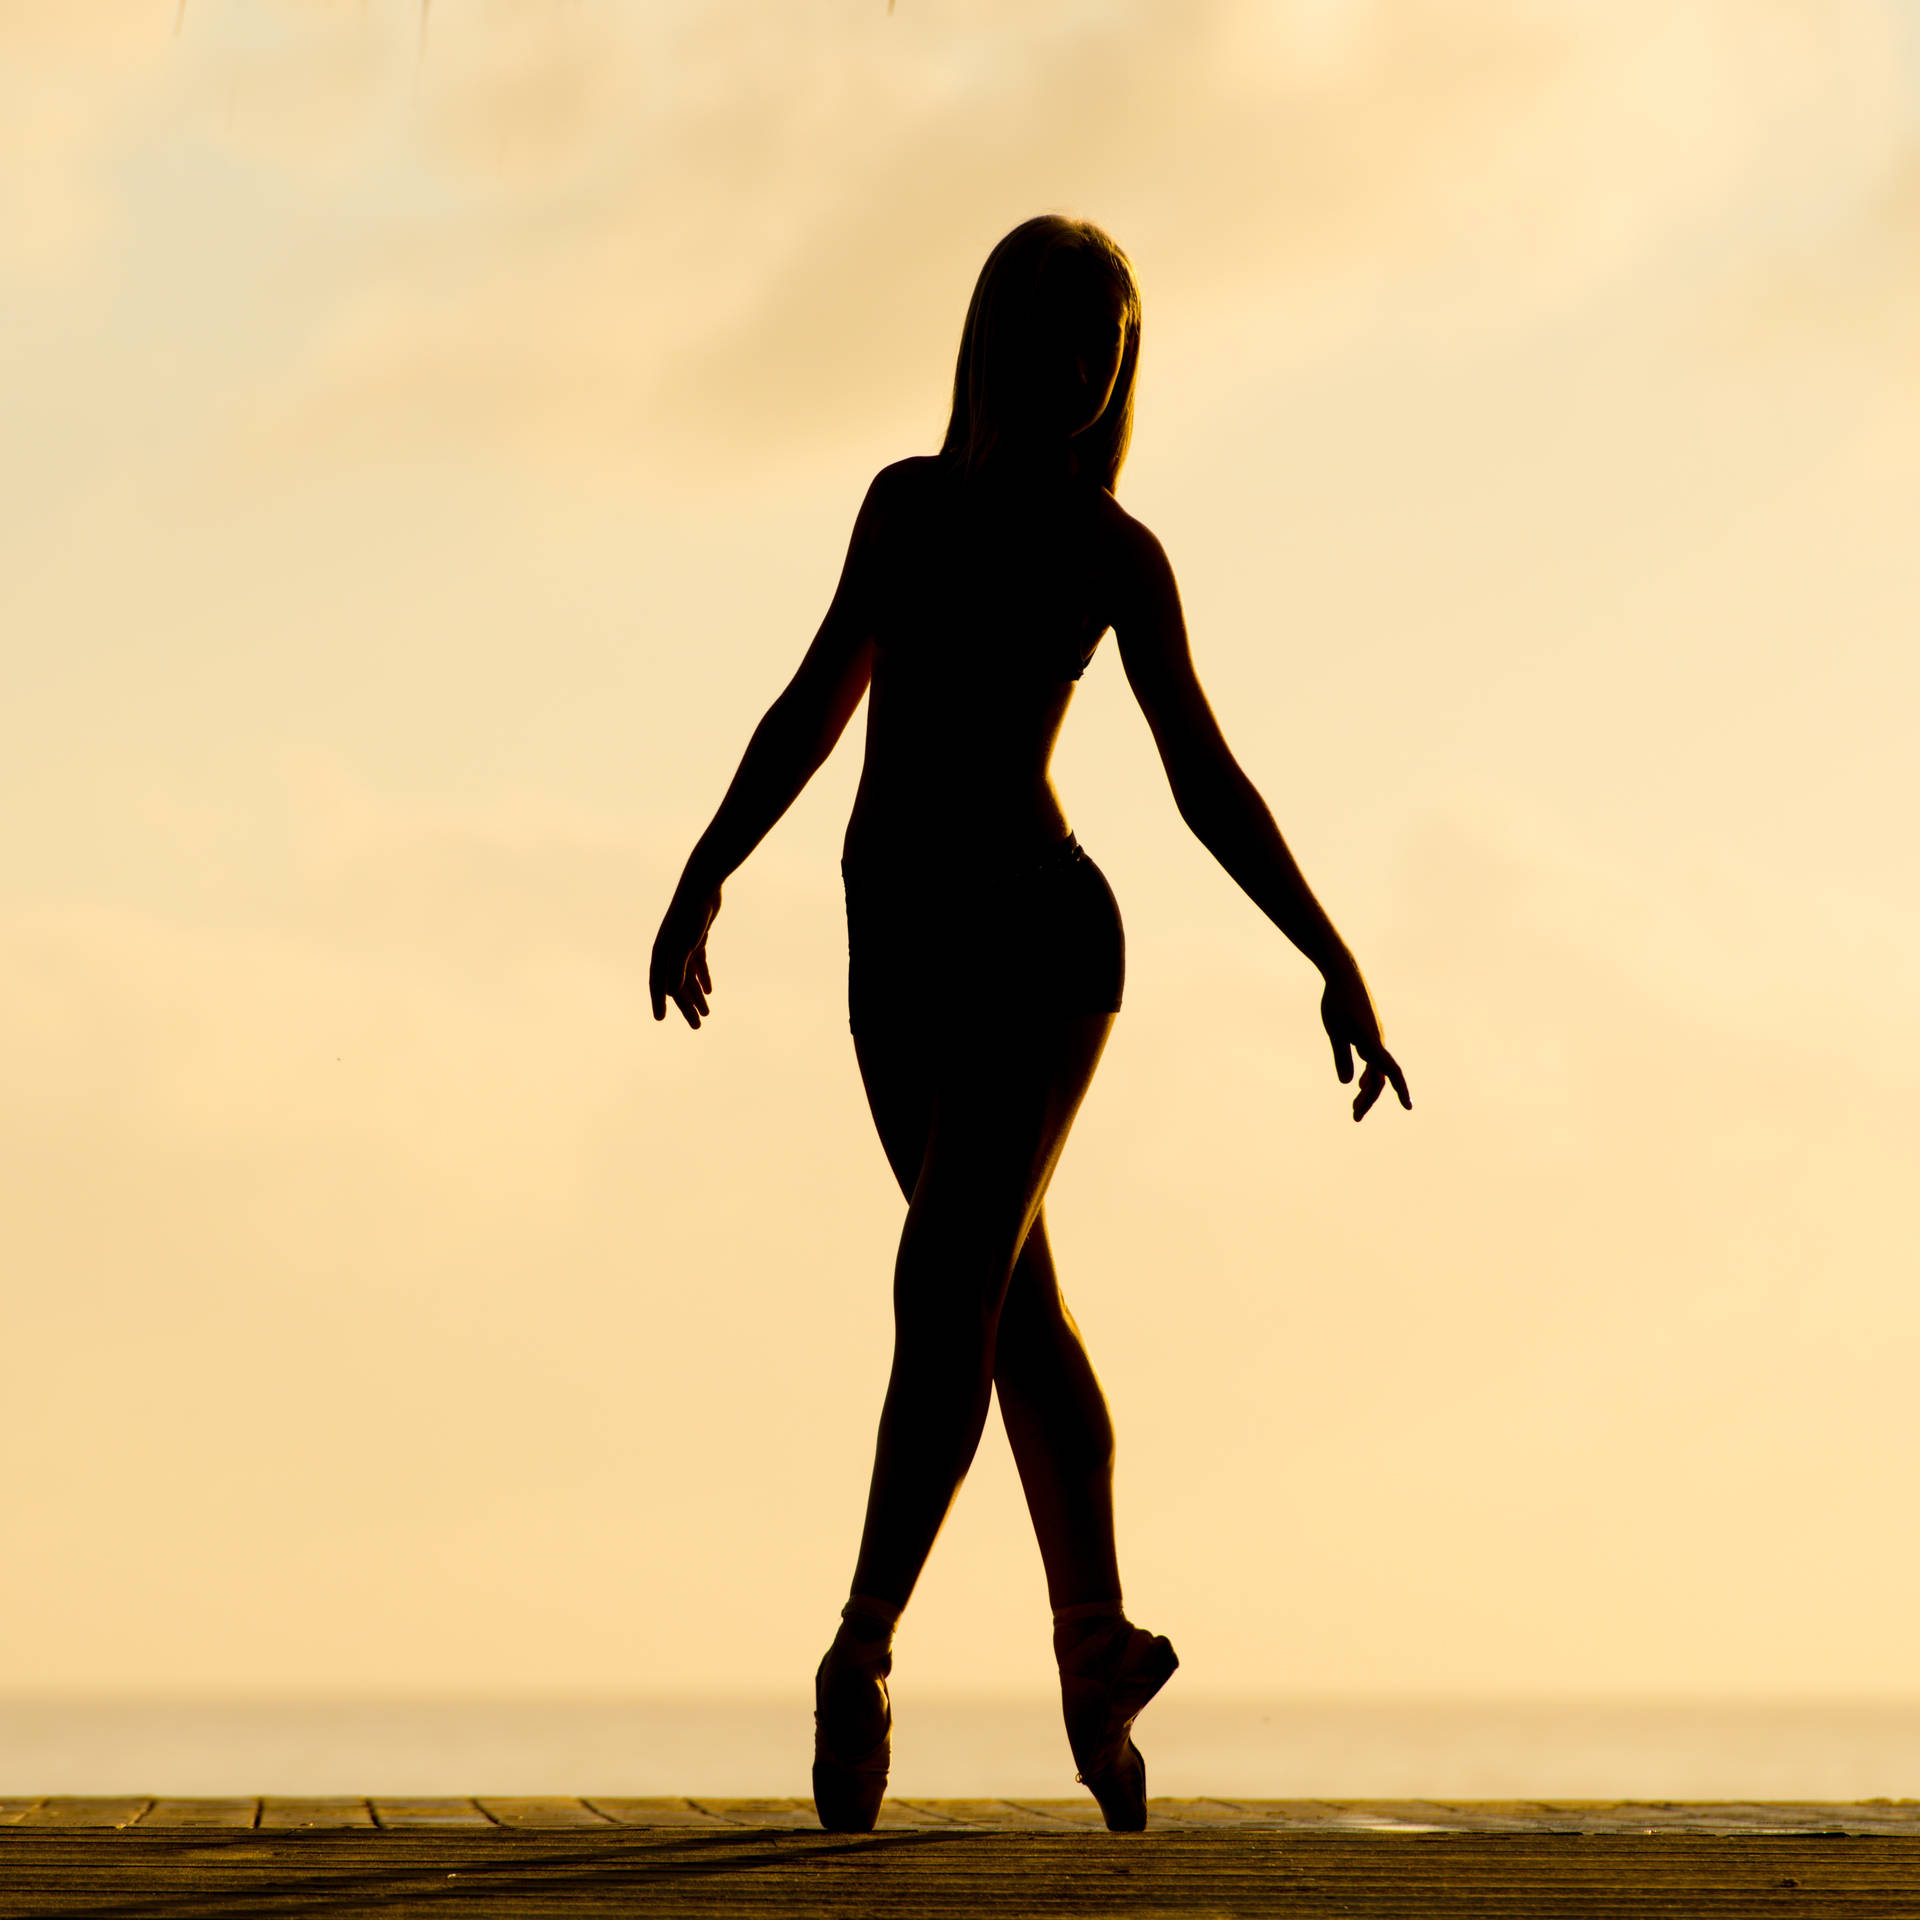 Modern Dance Silhouettes | Dance silhouette, Modern dance, Dance poses